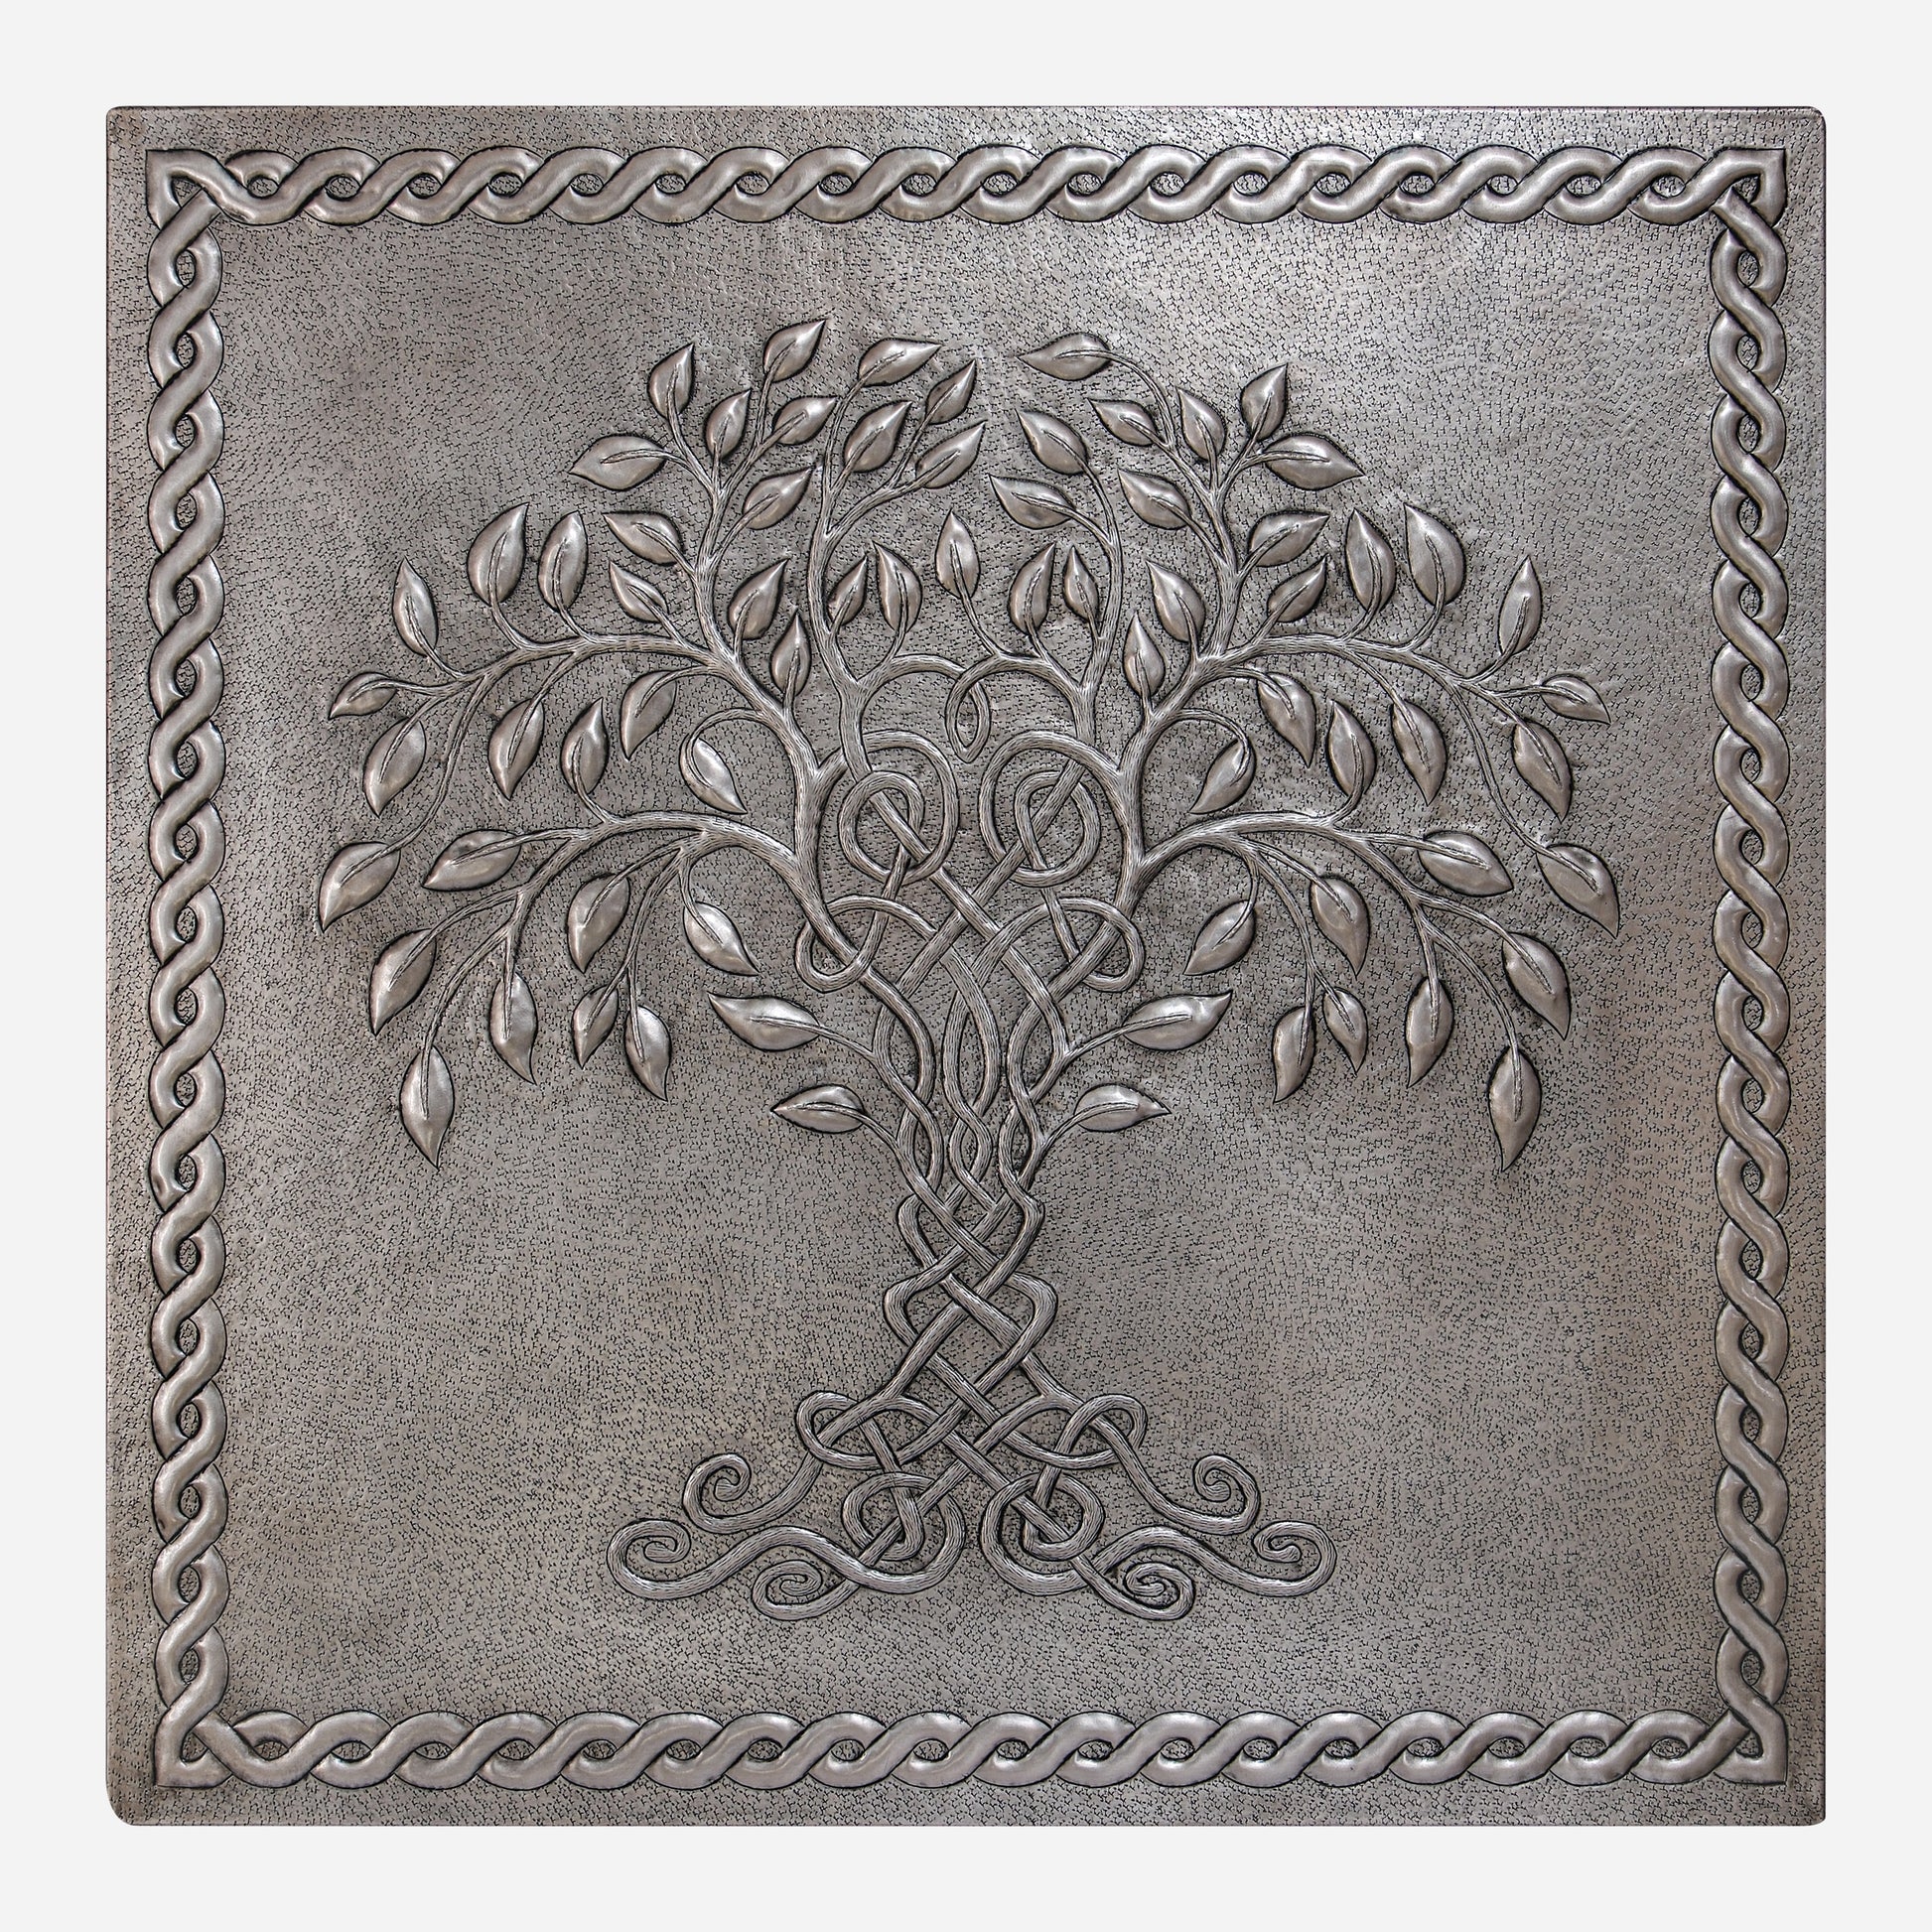 Copper Backsplash Panel (Tree of Life with Celtic Border, Silver Color)